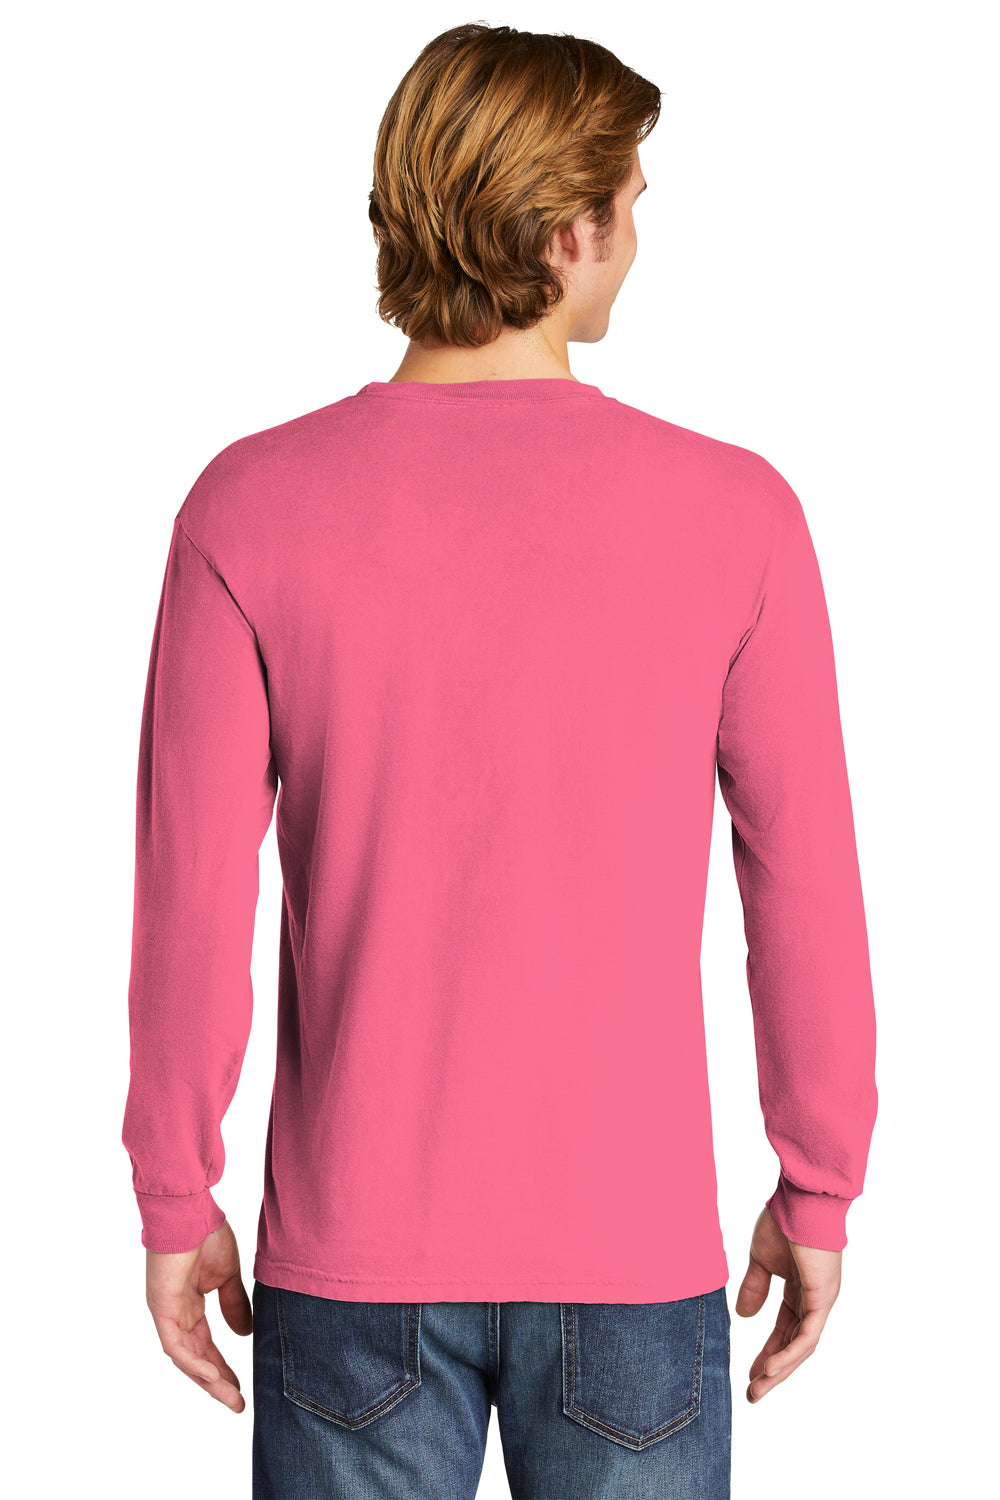 Comfort Colors 6014/C6014 Mens Long Sleeve Crewneck T-Shirt Crunchberry Pink Back